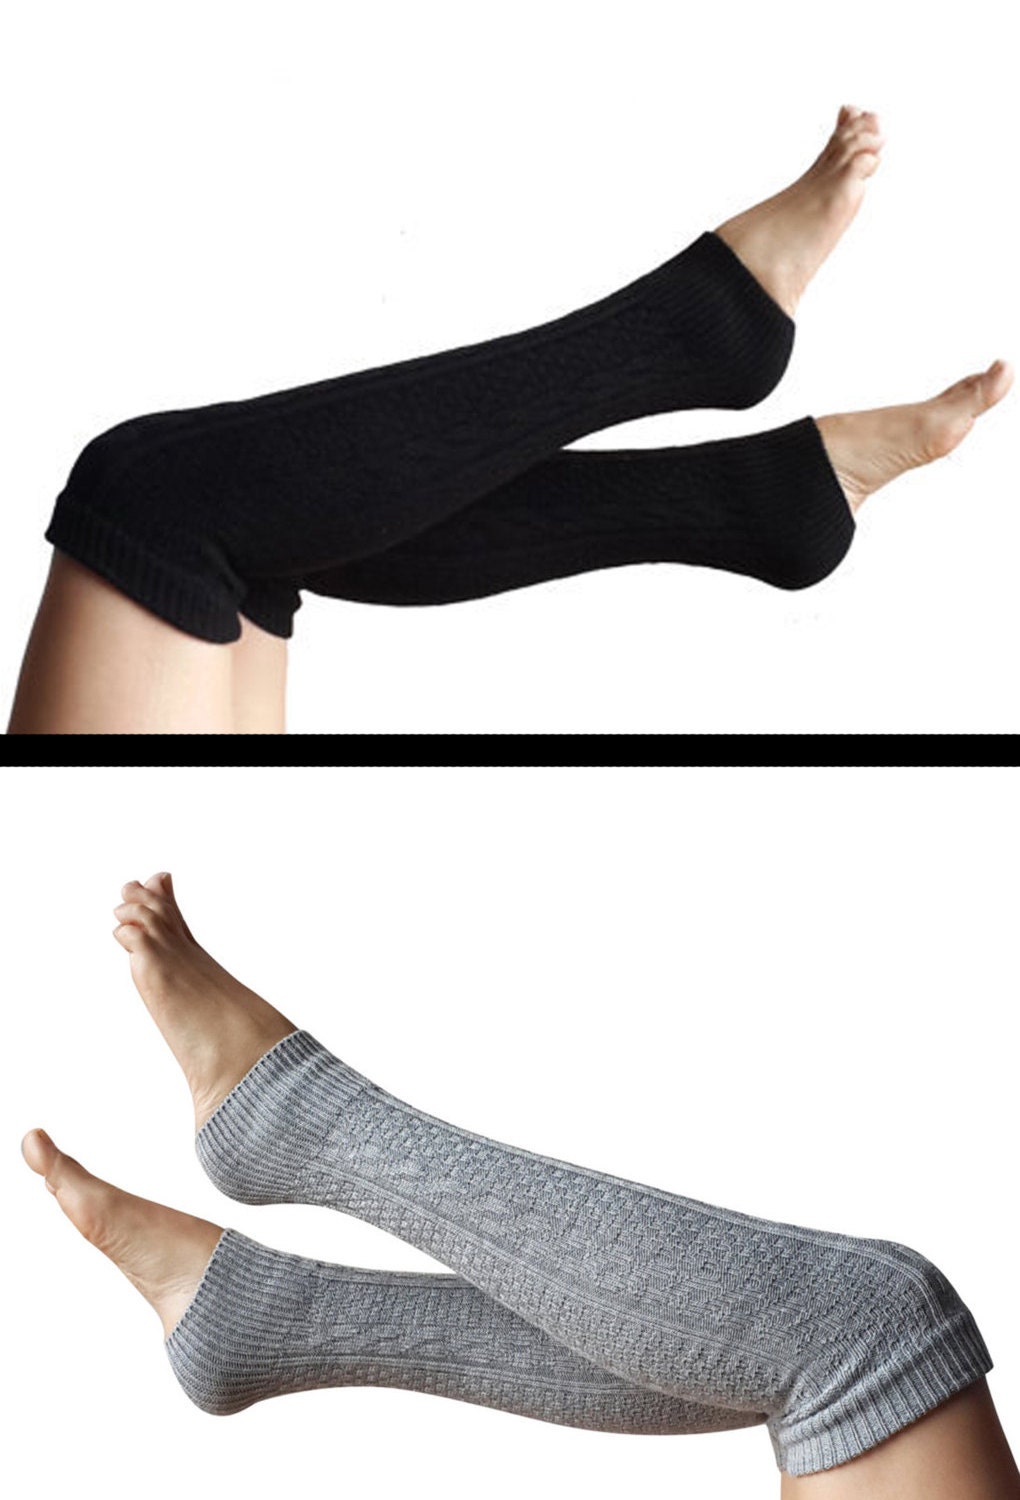 SEXY LEGWARMERS Black Leg Warmers Knitted Boot Socks by AGORAA